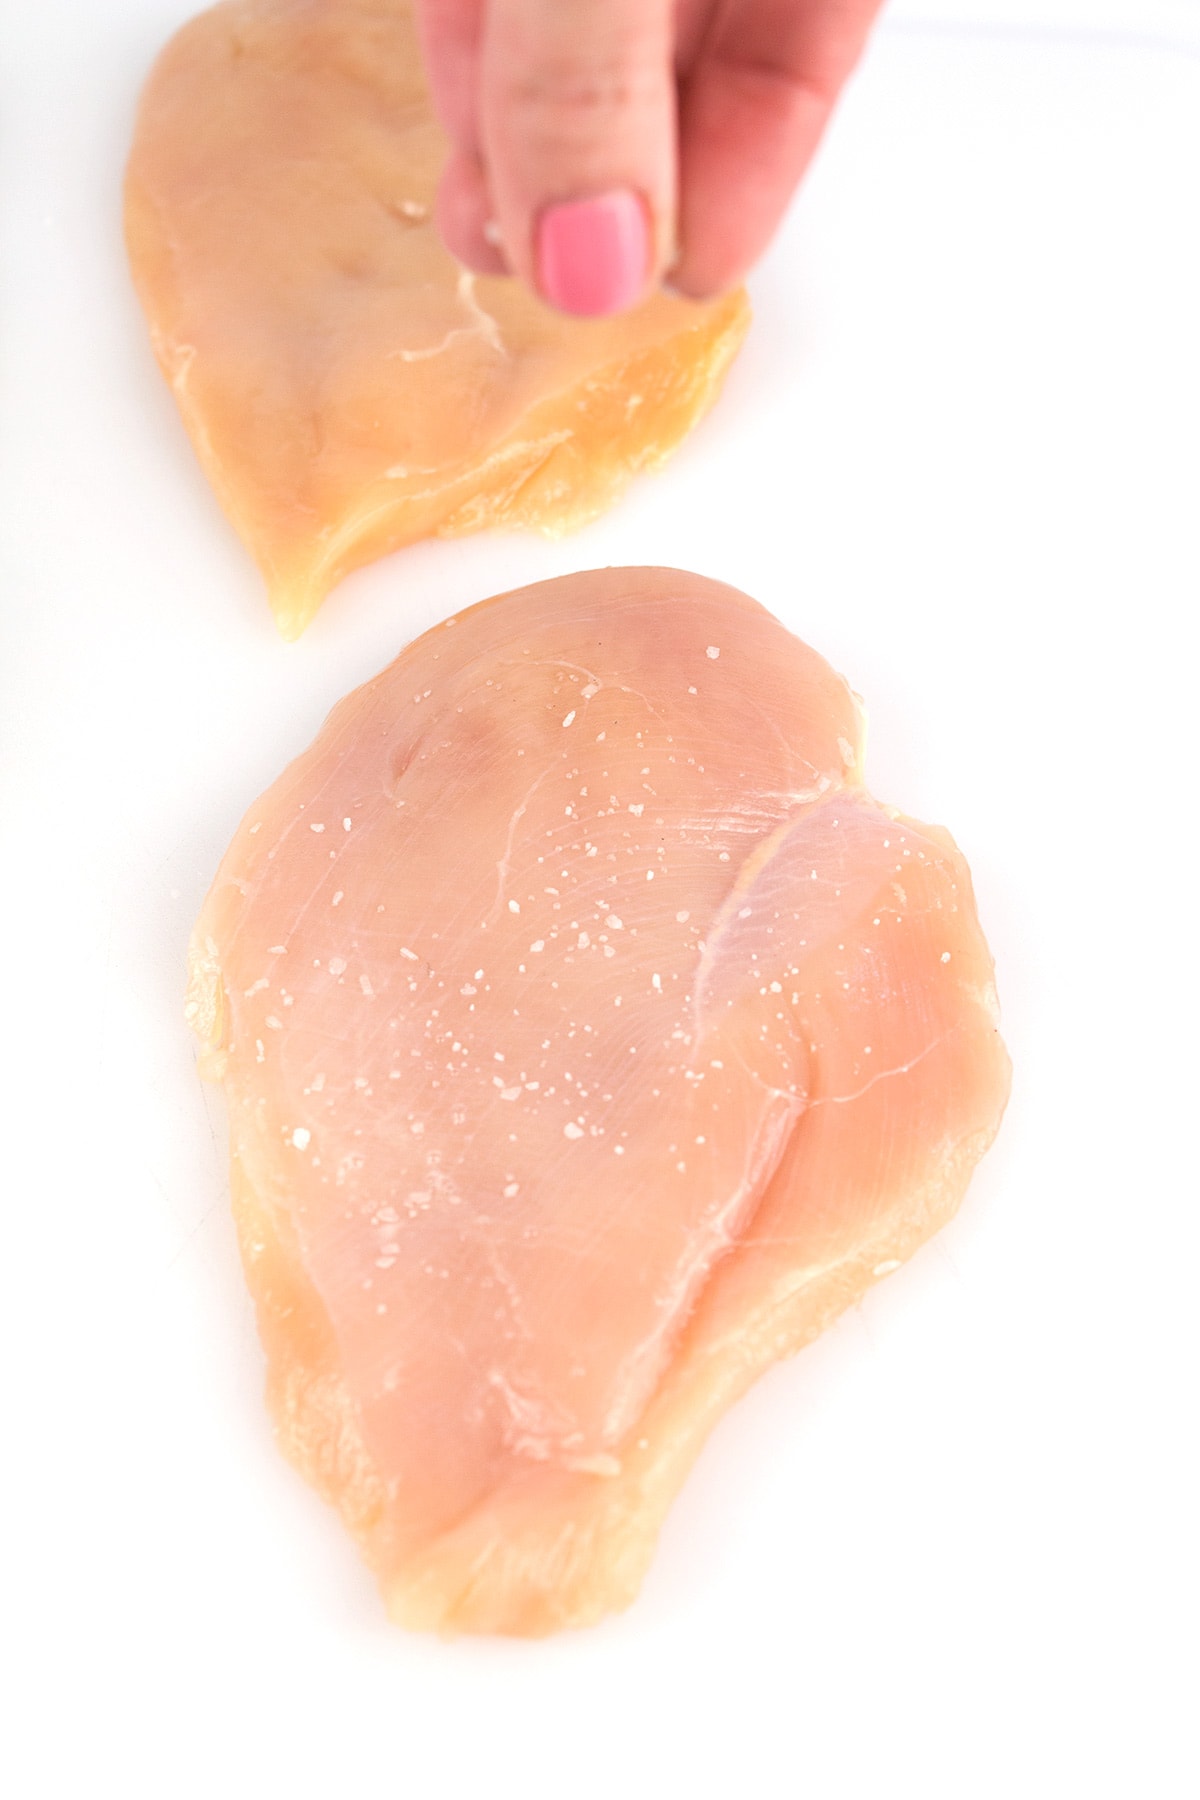 Sprinkling kosher salt on raw chicken breast.